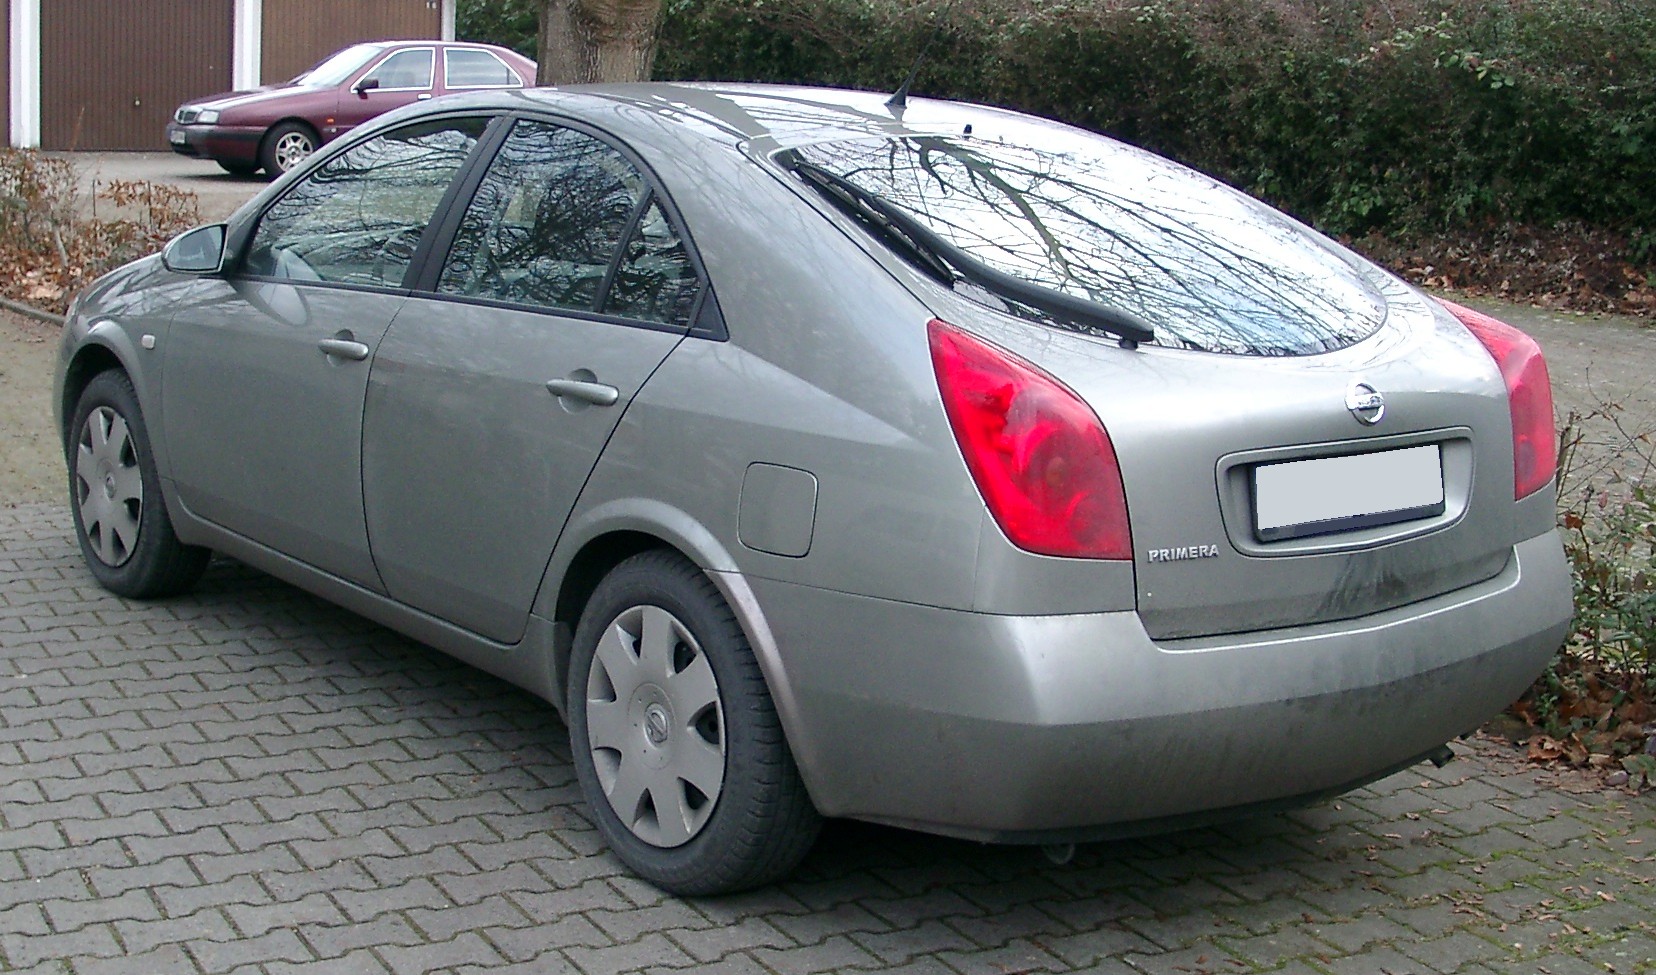 File:Nissan Primera rear 20080102.jpg - Wikimedia Commons